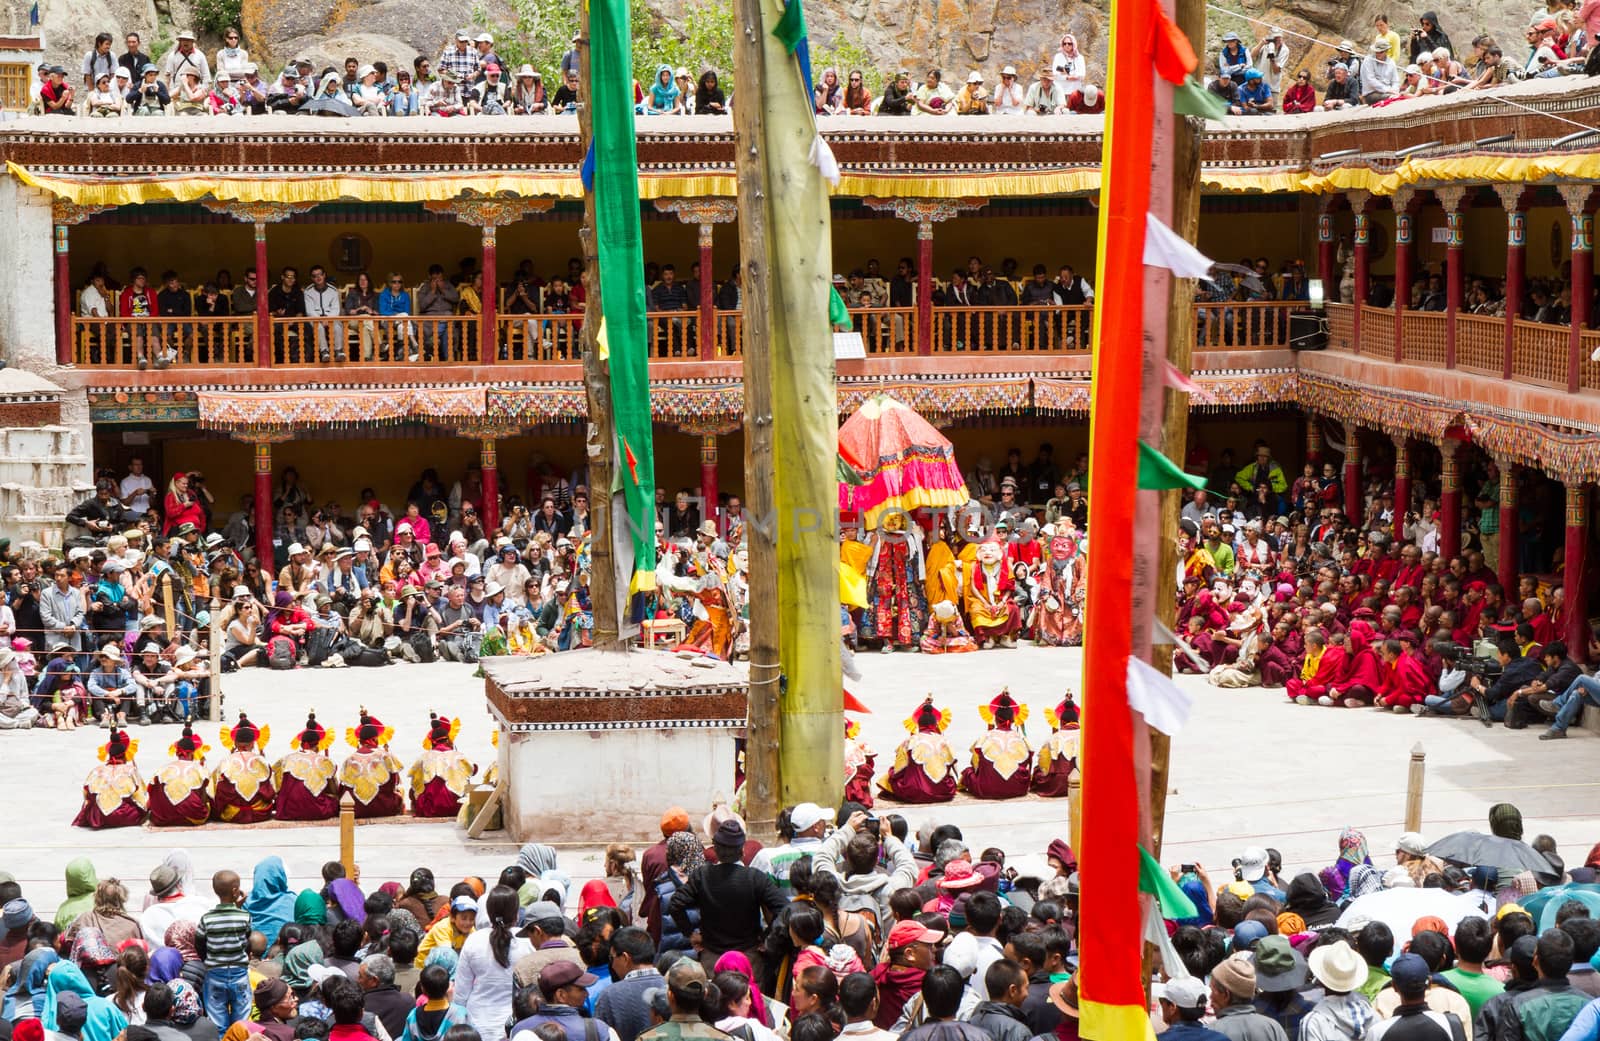 Hemis, India -  June 29, 2012: courtyard of the monastery during the Cham Dance Festival of Tibetan buddhism, full of spectators and performers in Hemis monastery, India.